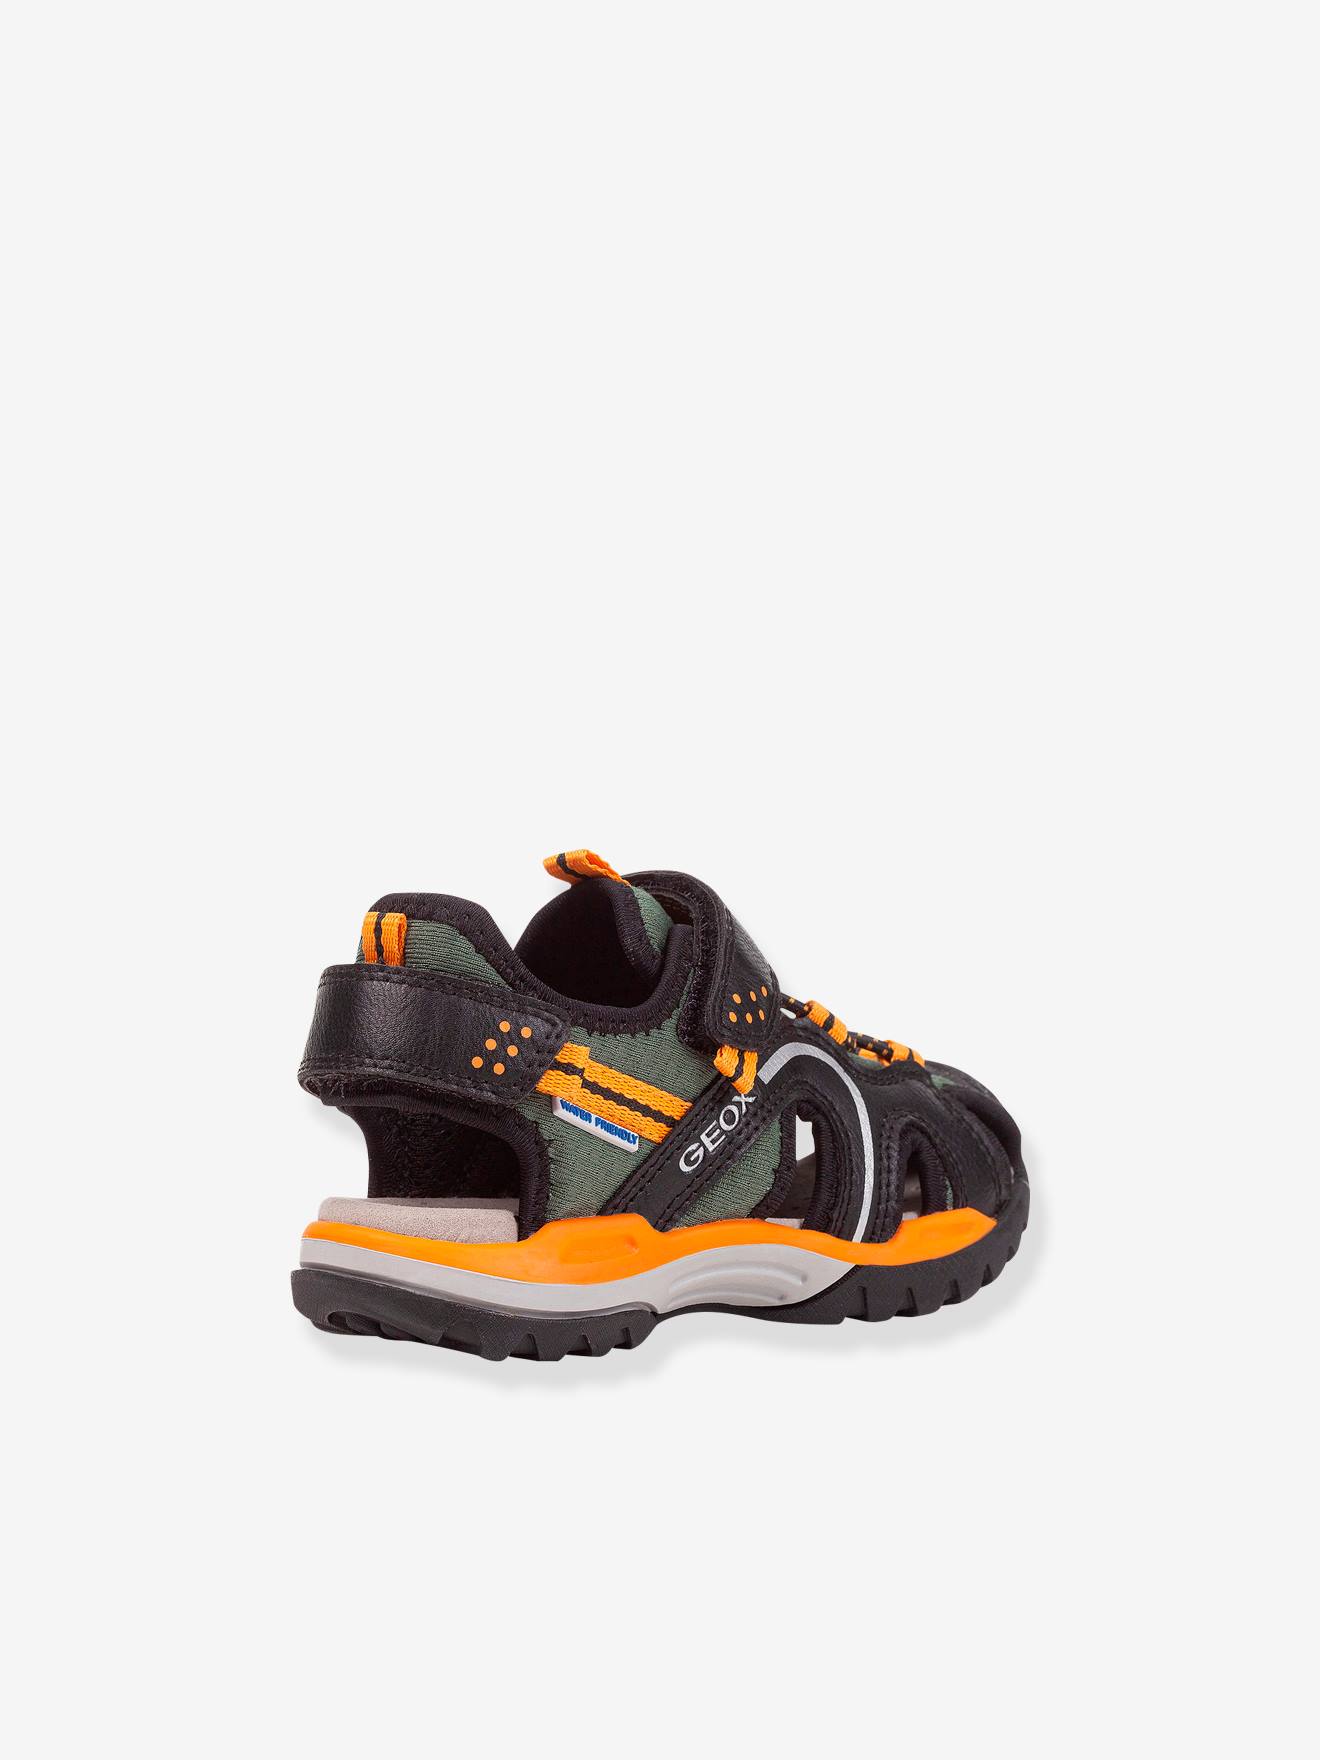 Sandals for Boys, J. Borealis B.B by GEOX® - black dark solid, Shoes